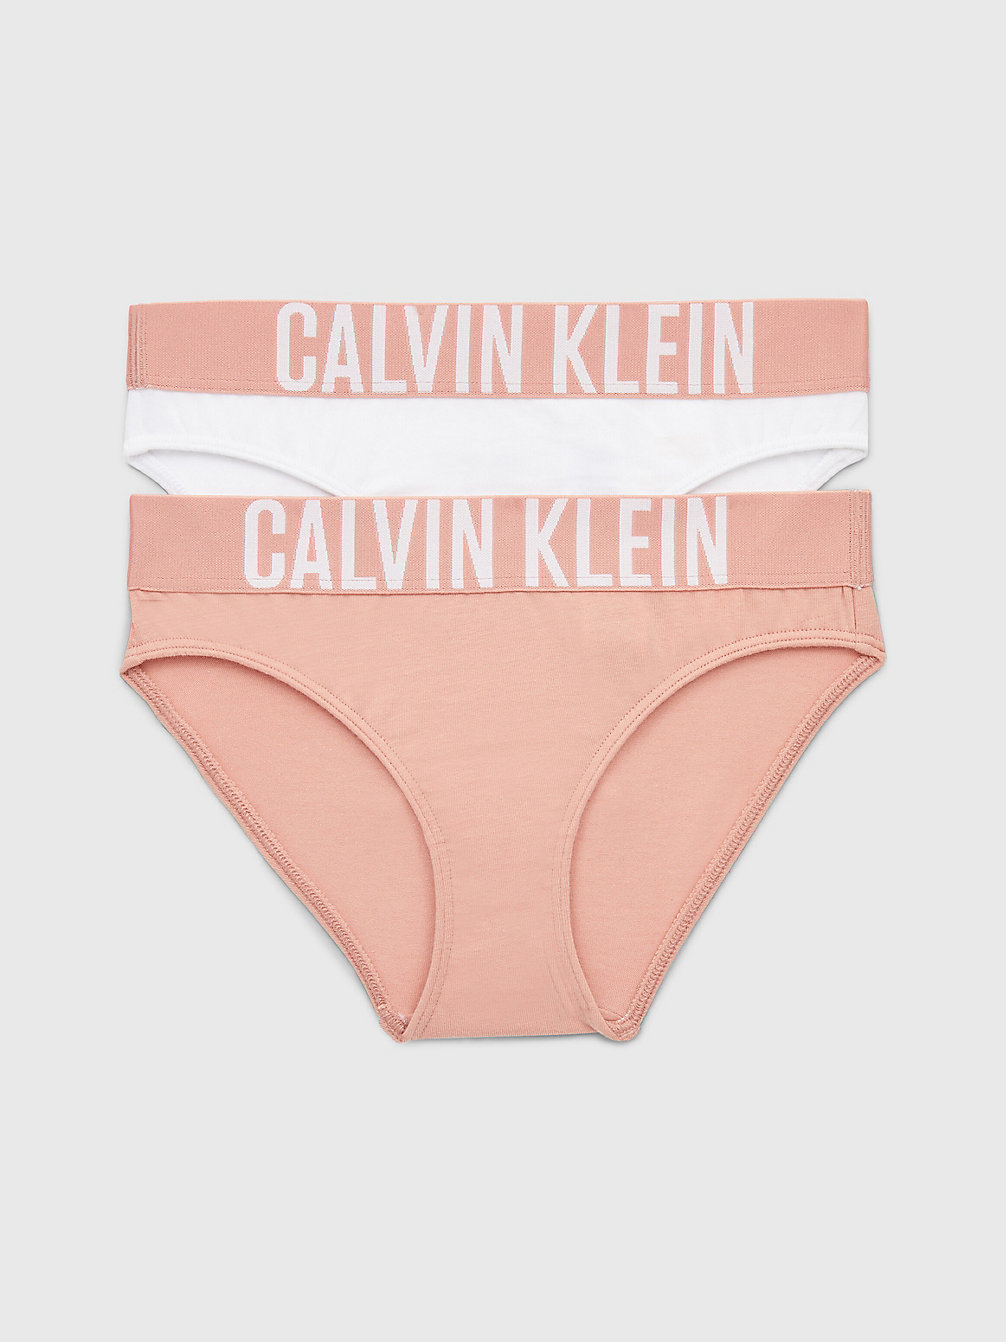 PINKMOCHA/PVHWHITE Lot De 2 Culottes Pour Fille - Intense Power undefined girls Calvin Klein